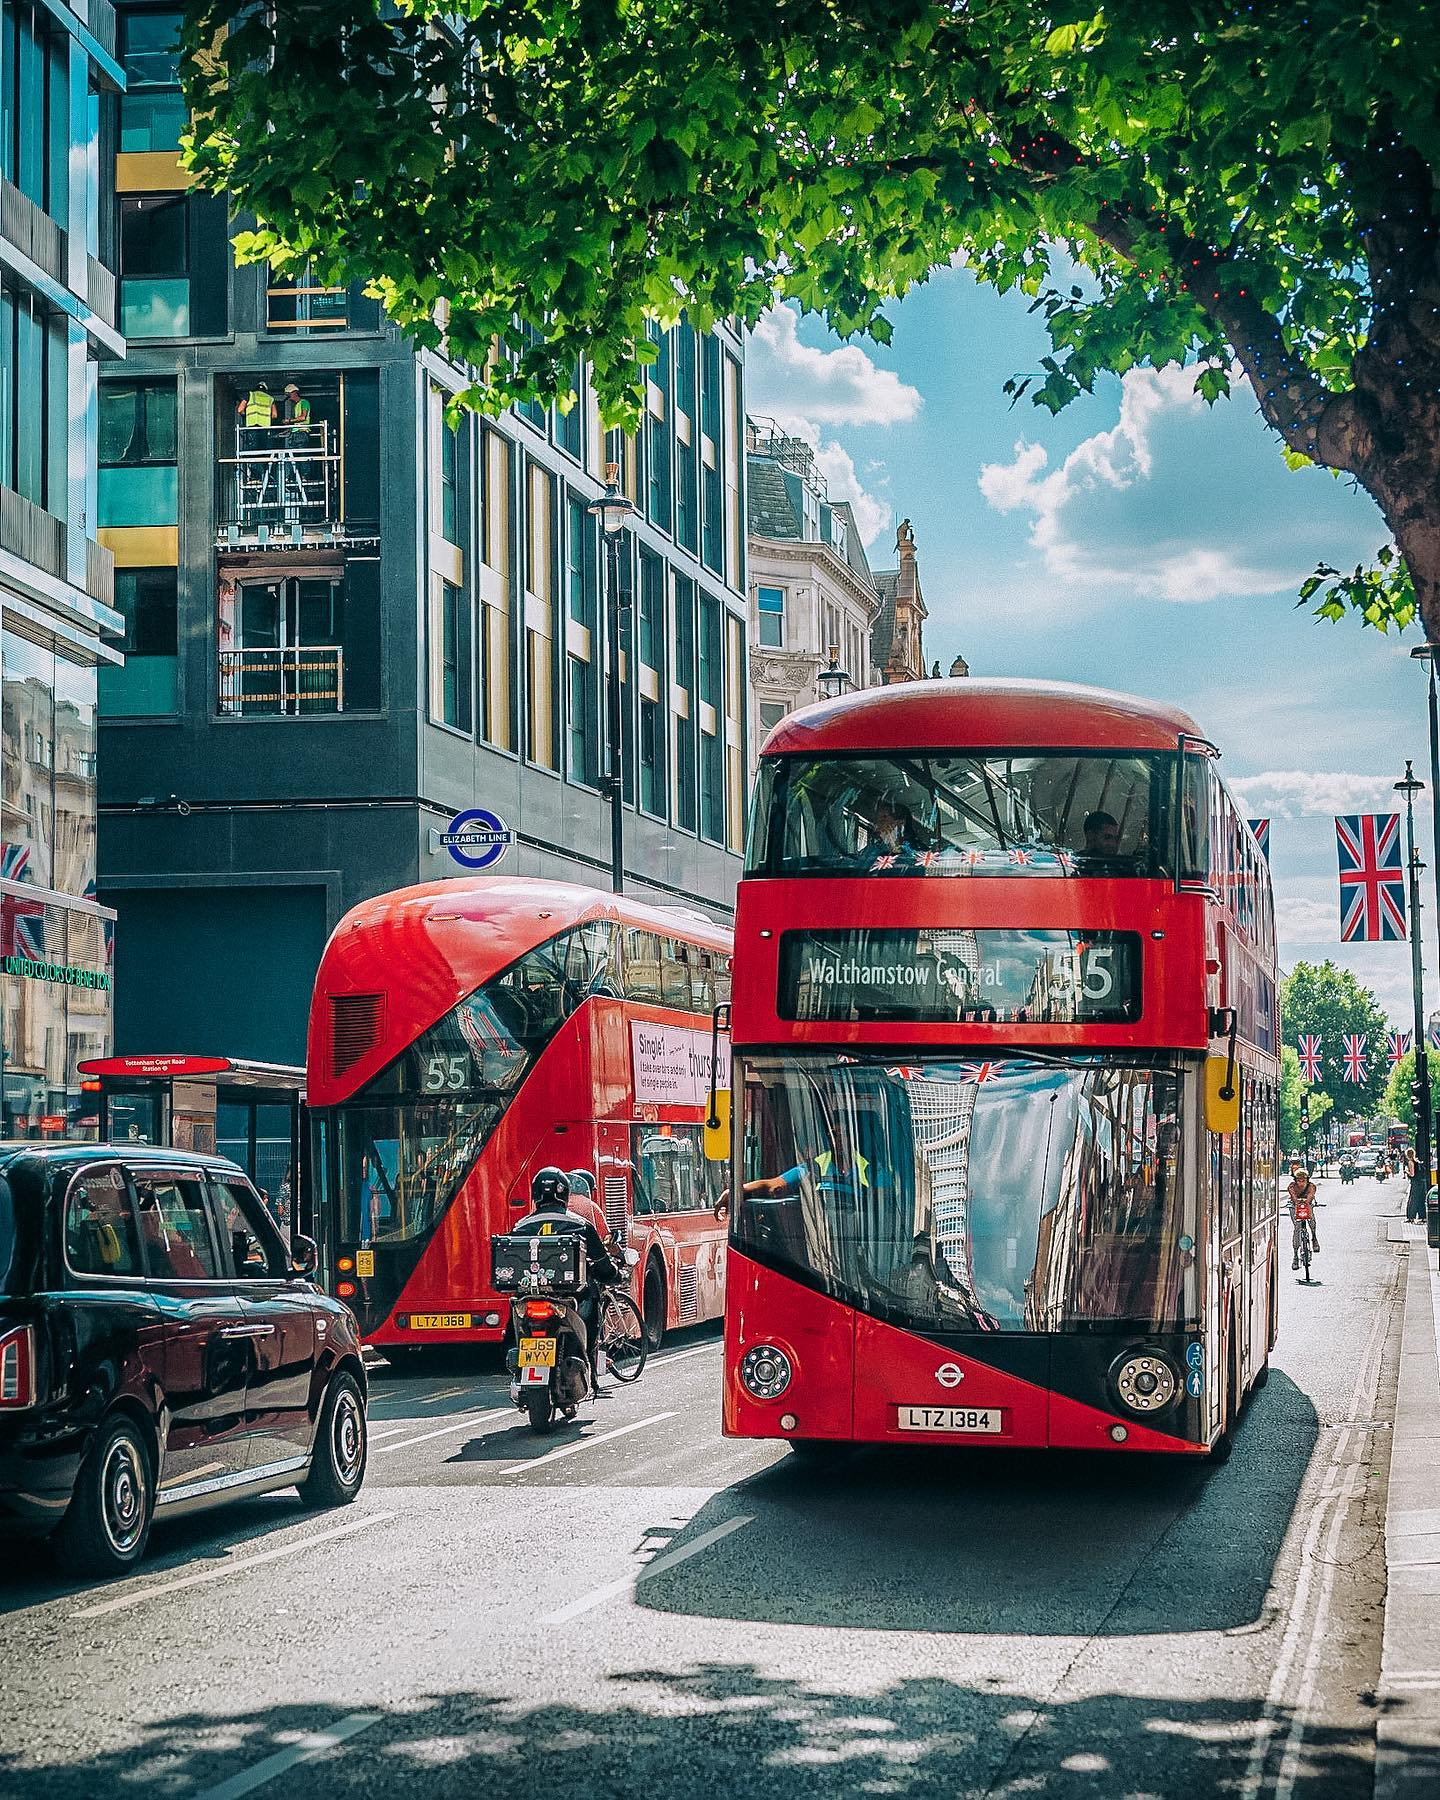 Buses on London street